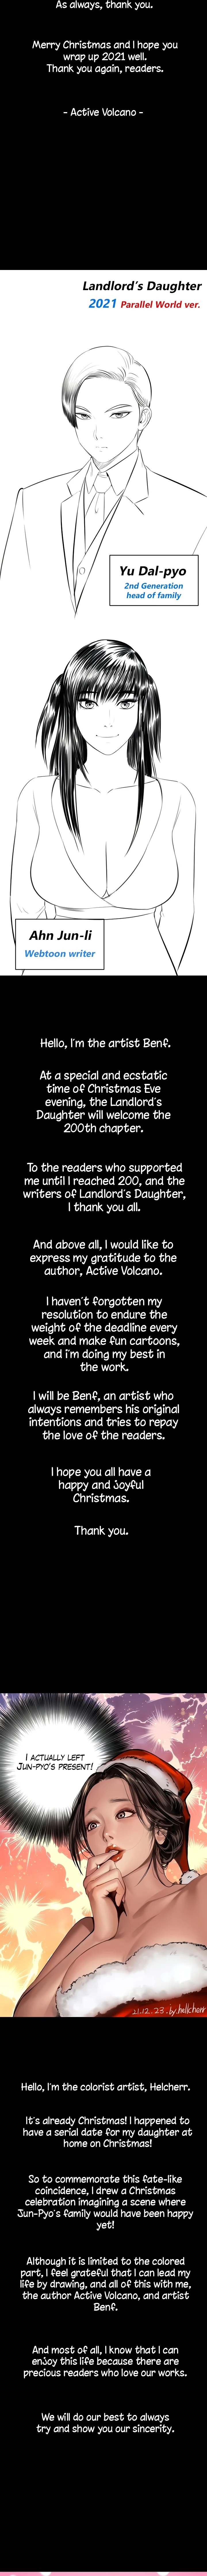 Landlord’s Little Daughter image